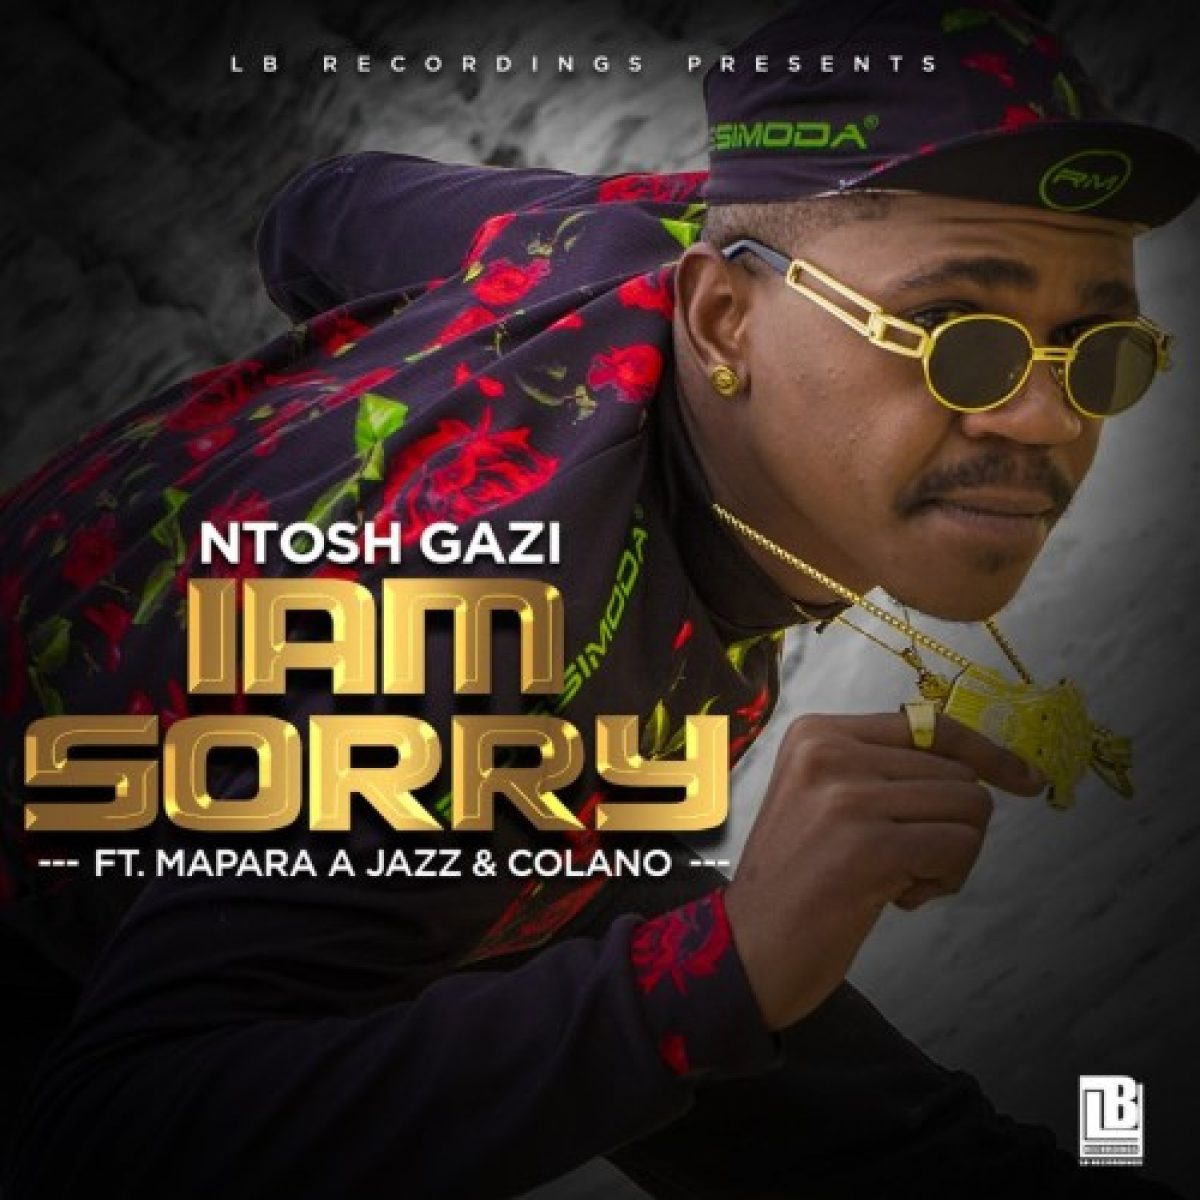 download - VIDEO: Ntosh Gazi Ft. Mapara A Jazz, Calona - I am Sorry 